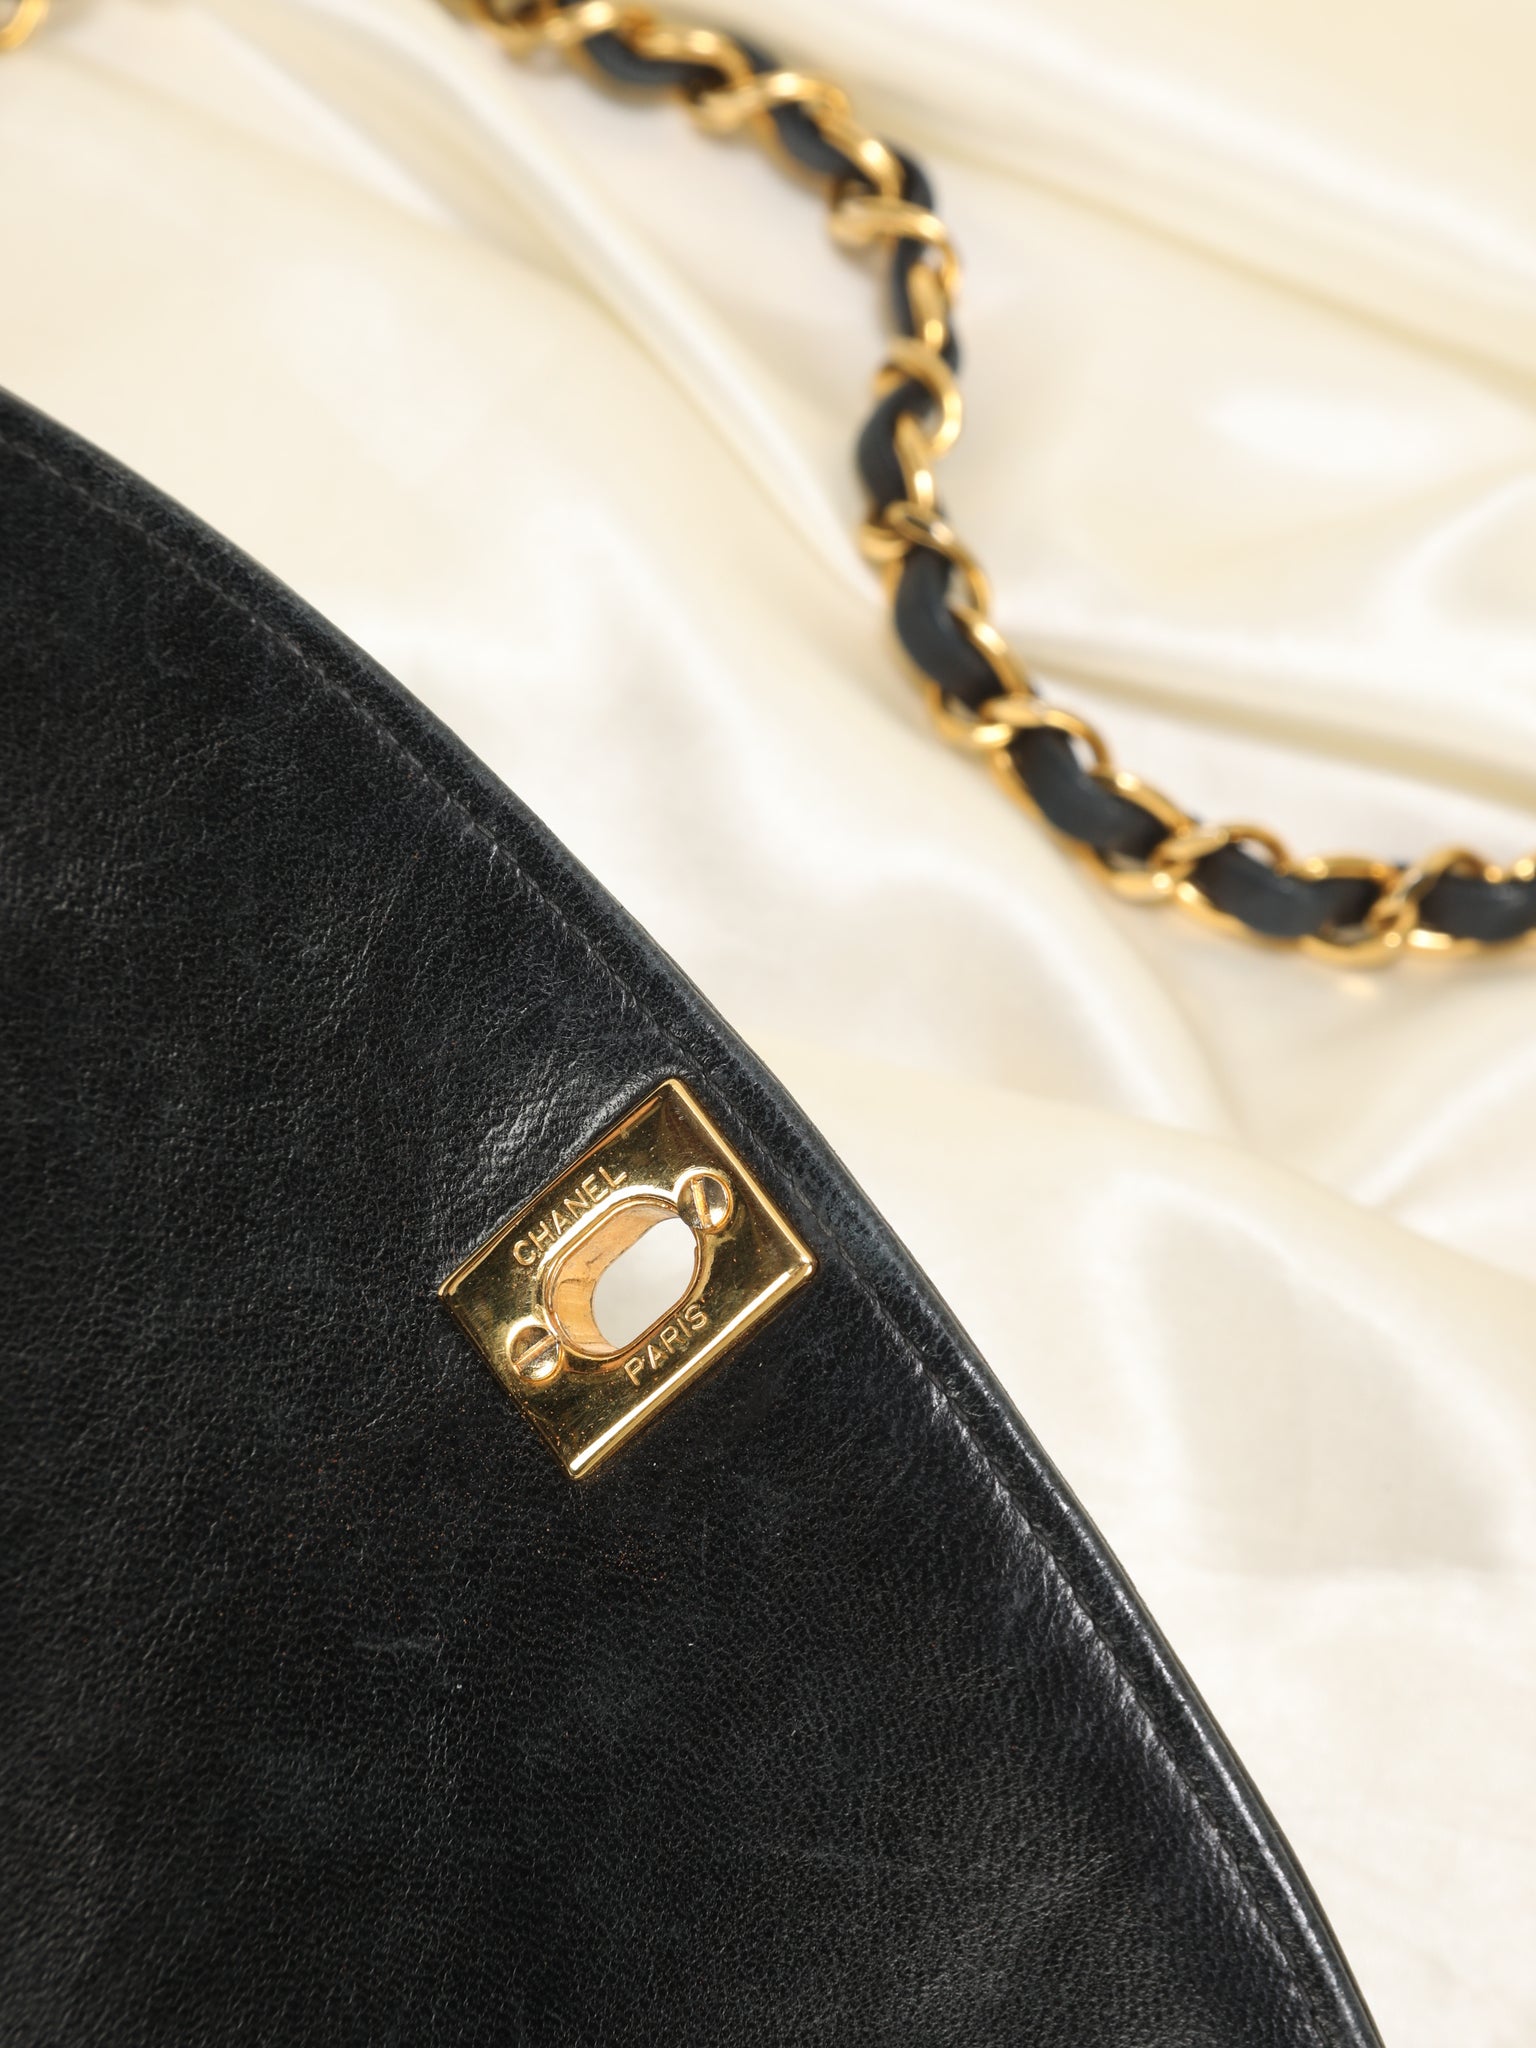 Chanel Diana Medium Flap Bag